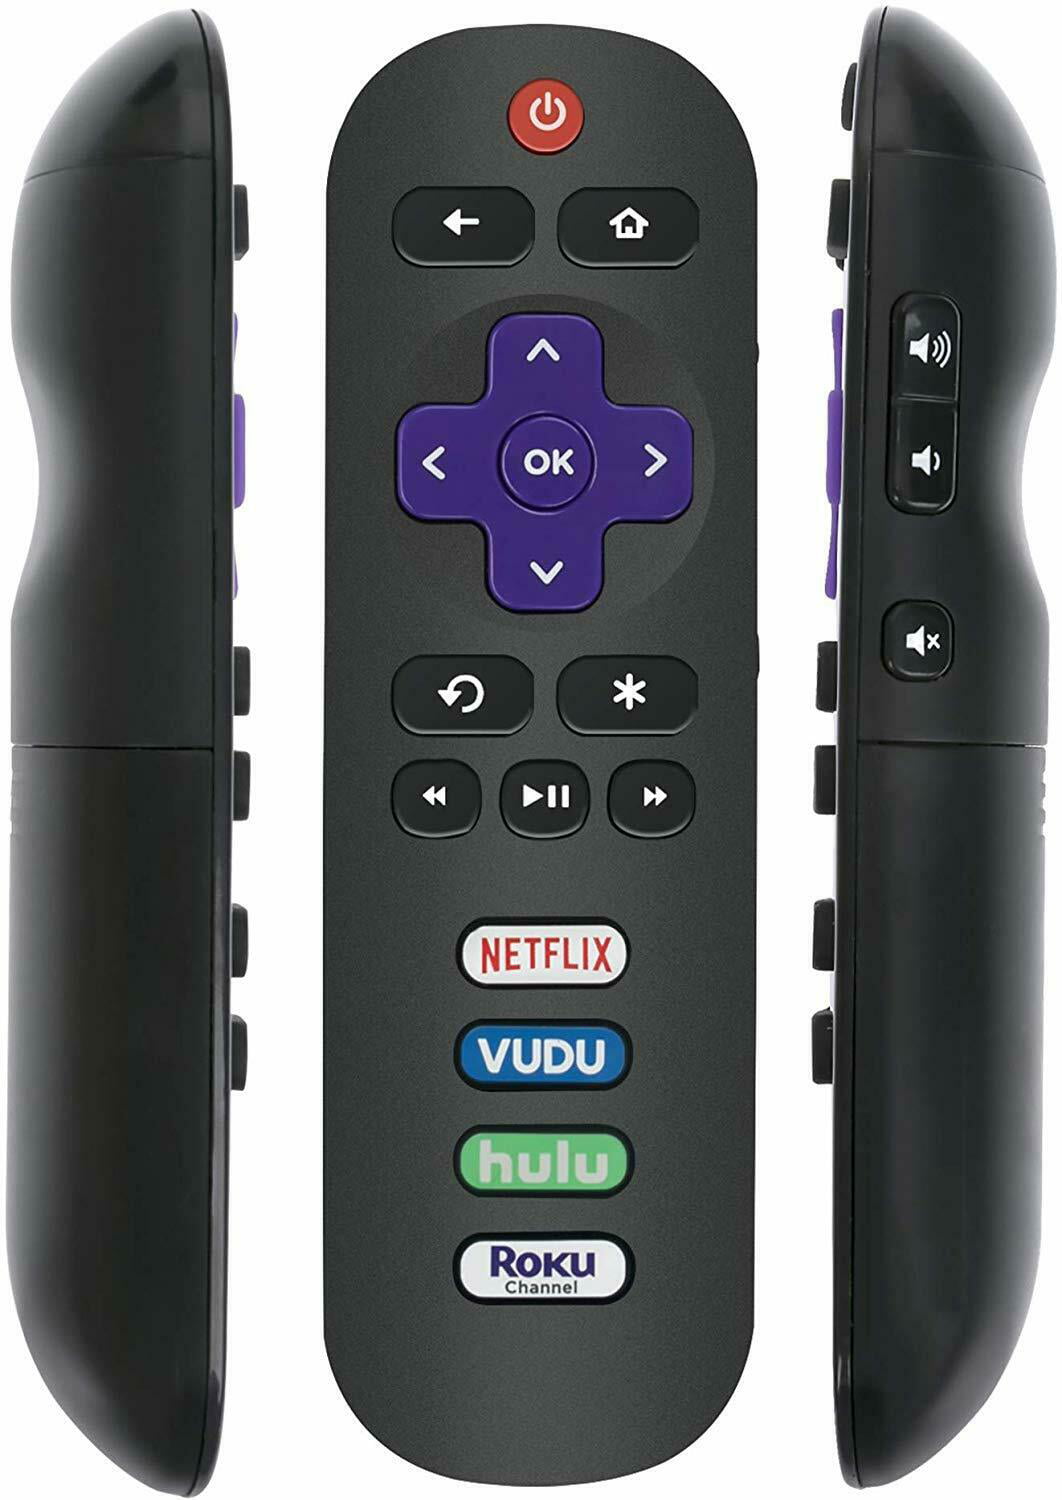 Roku tv remote